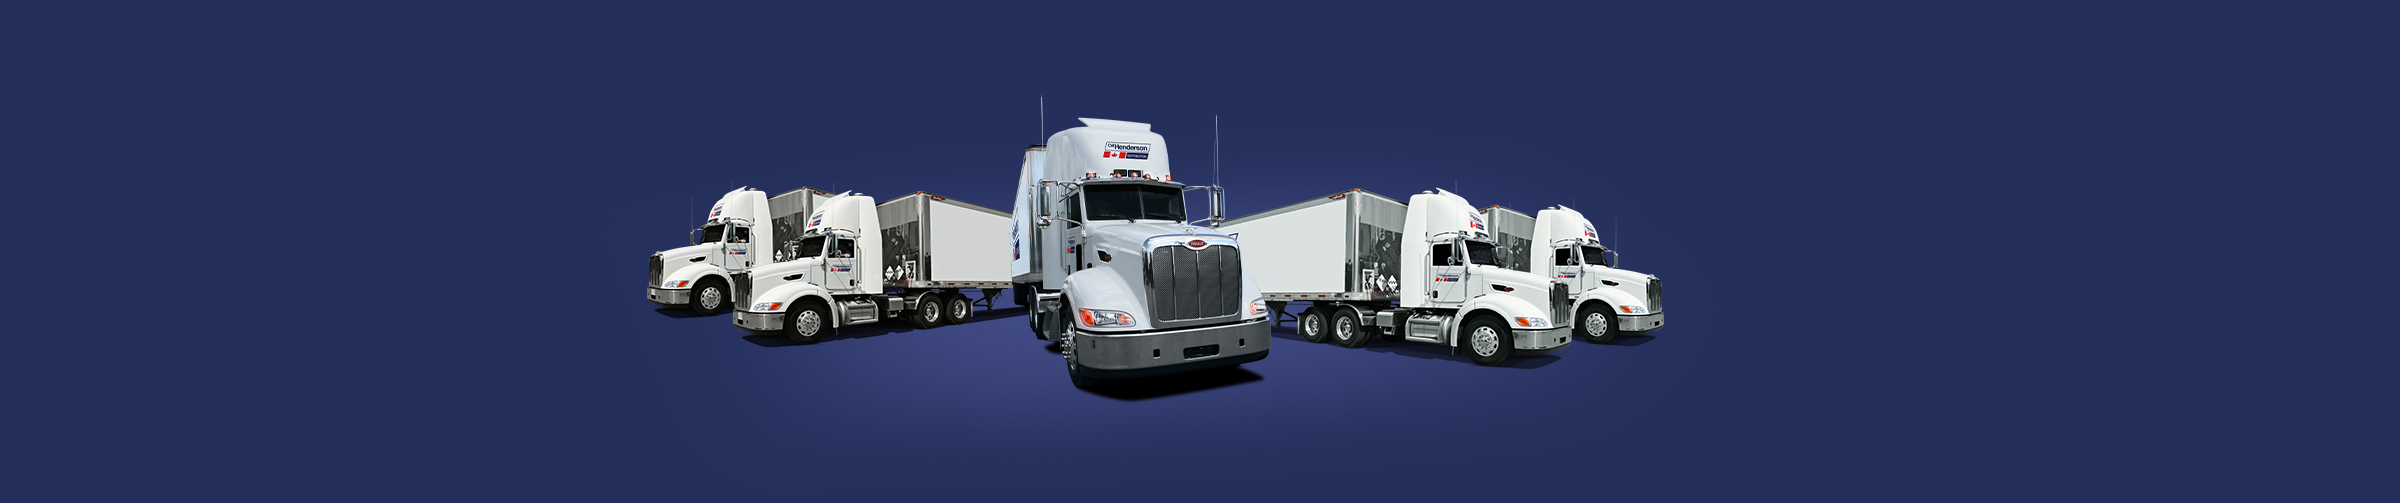 CW Henderson Distribution fleet of trucks